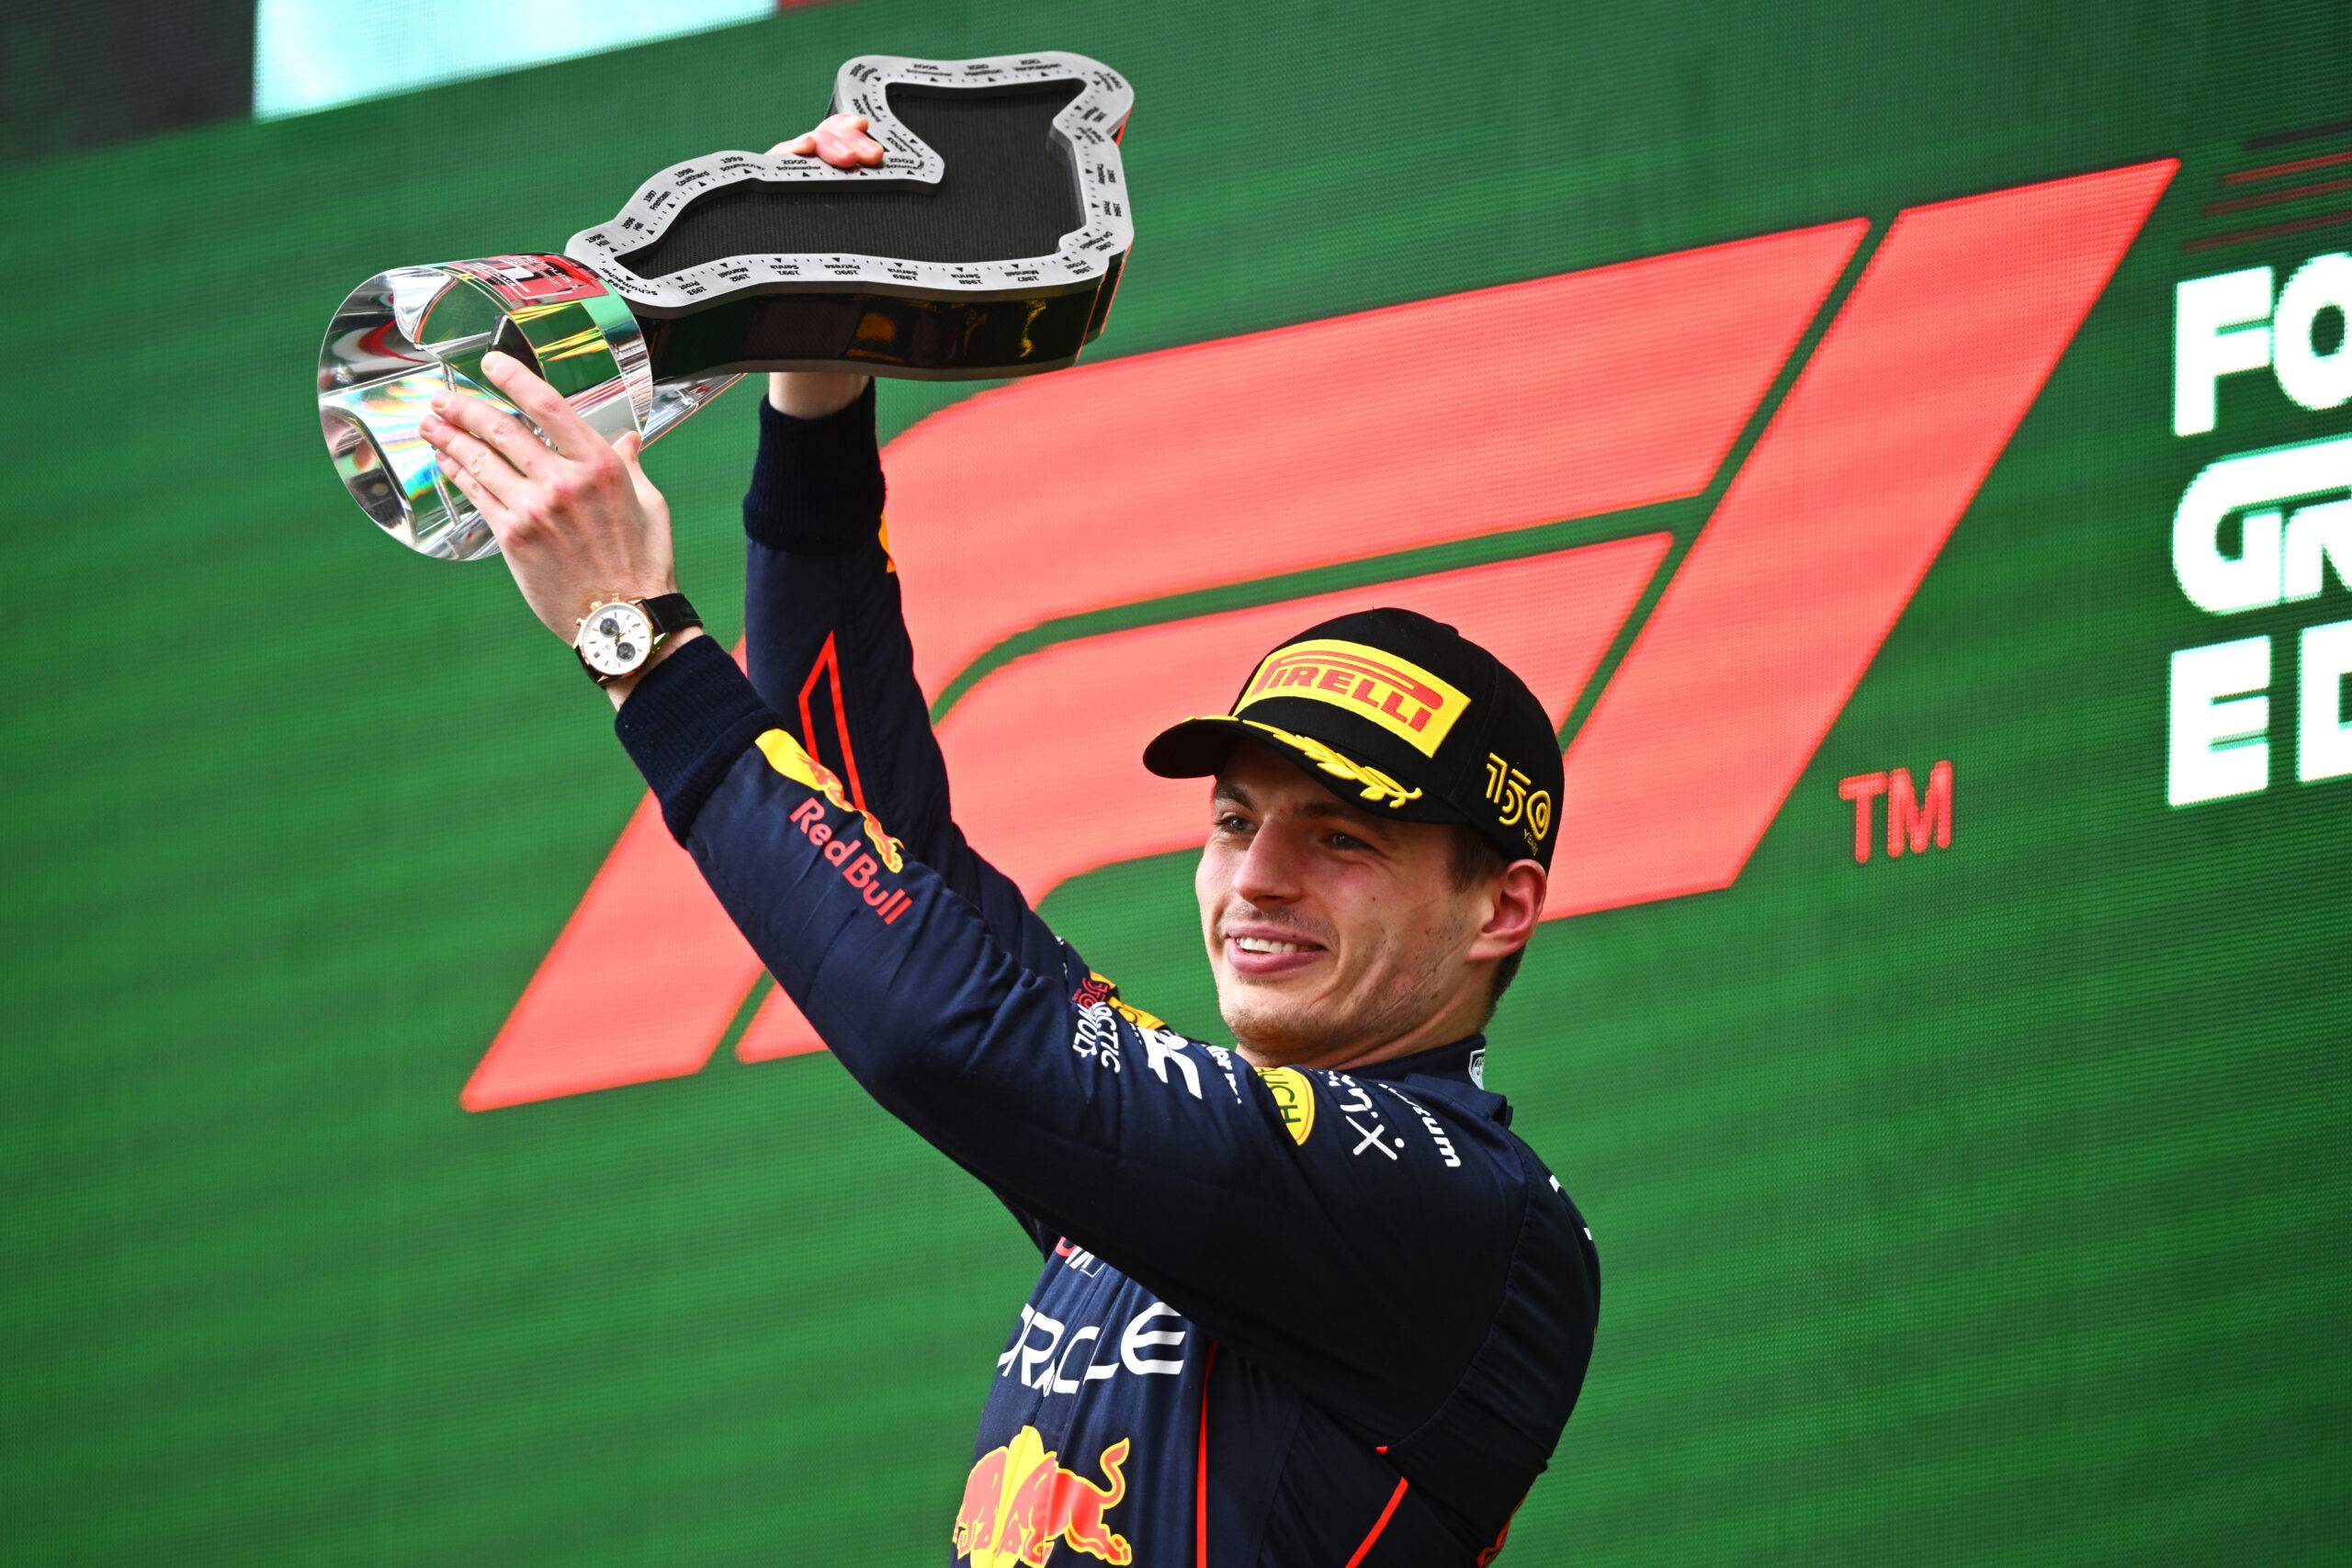 Max Verstappen wins at Imola